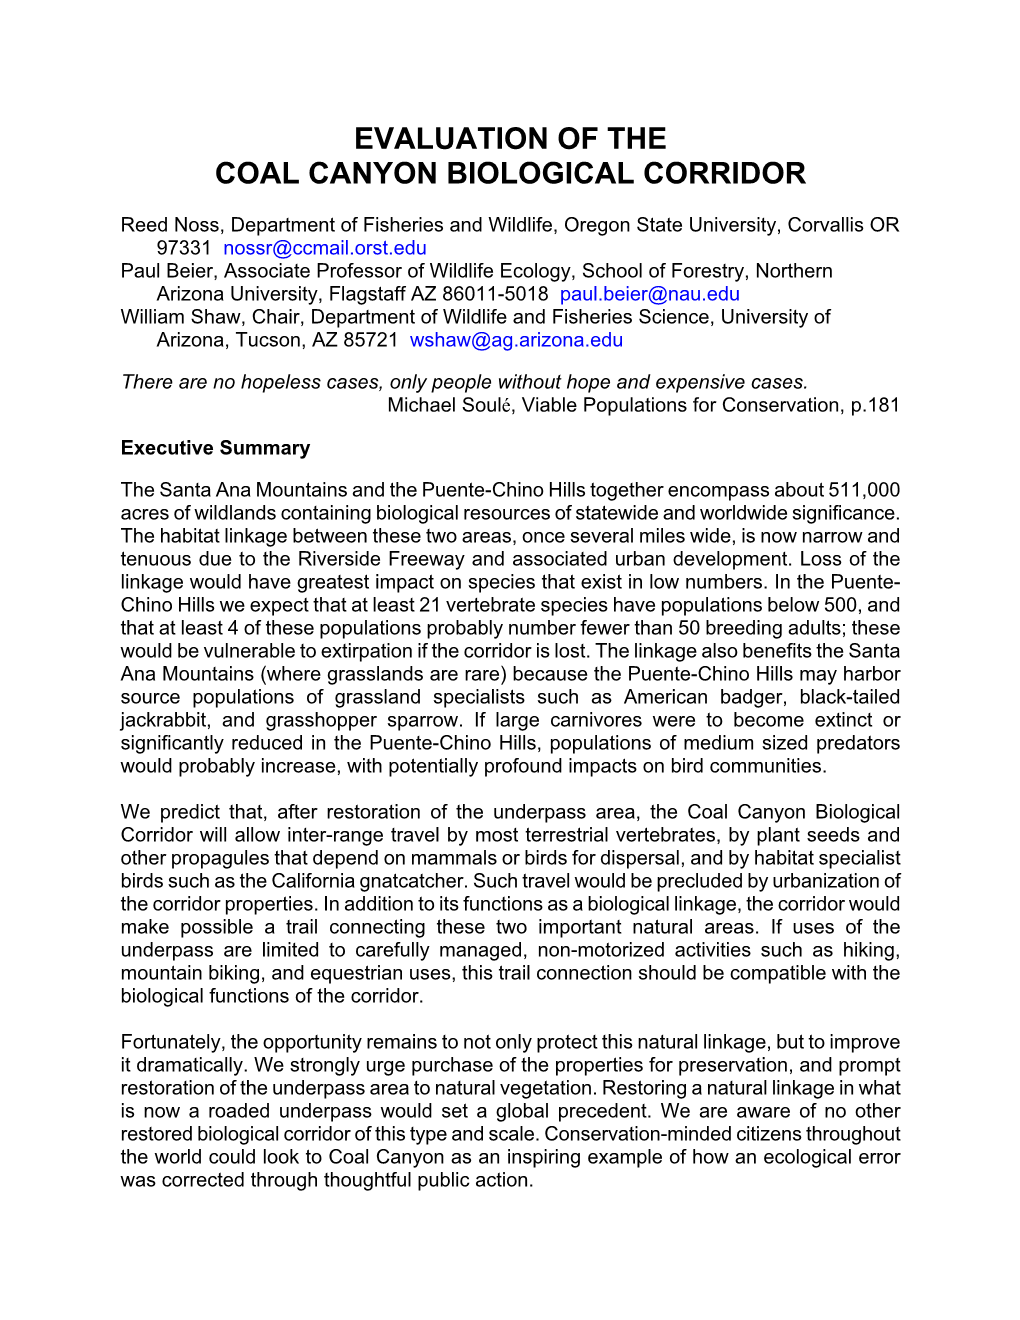 Evaluation of the Coal Canyon Biological Corridor